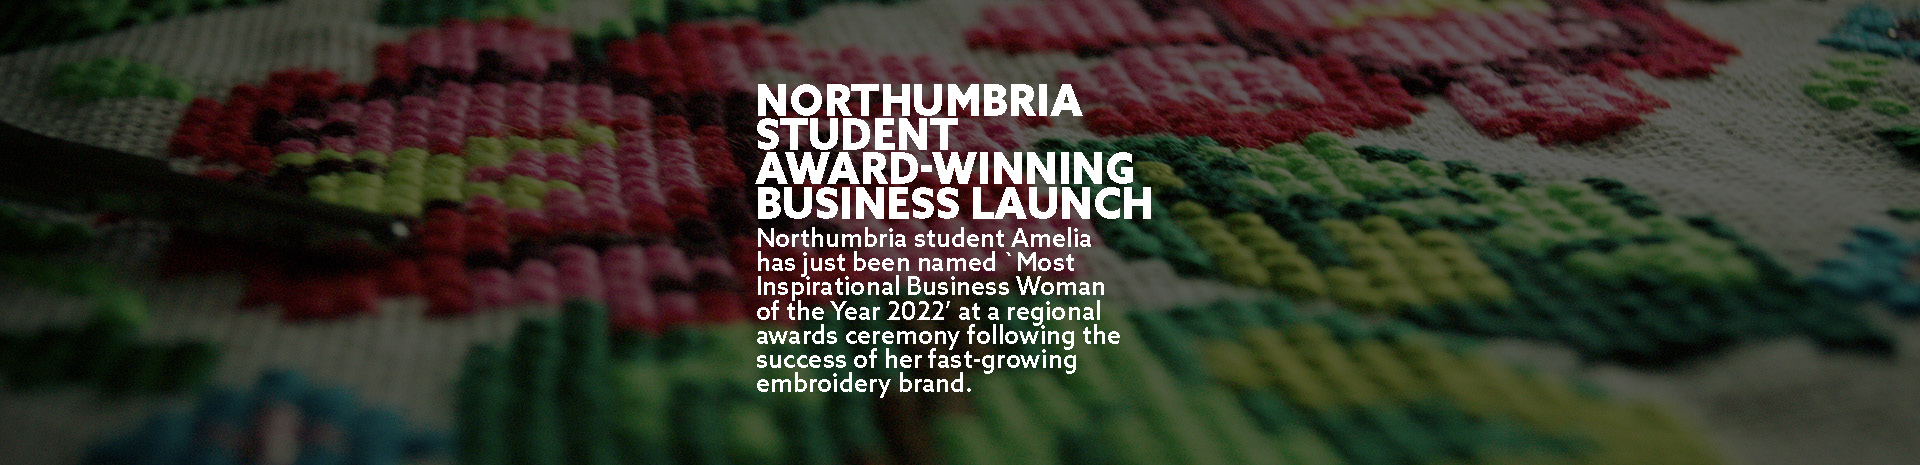 Northumbria student award-winning business launch